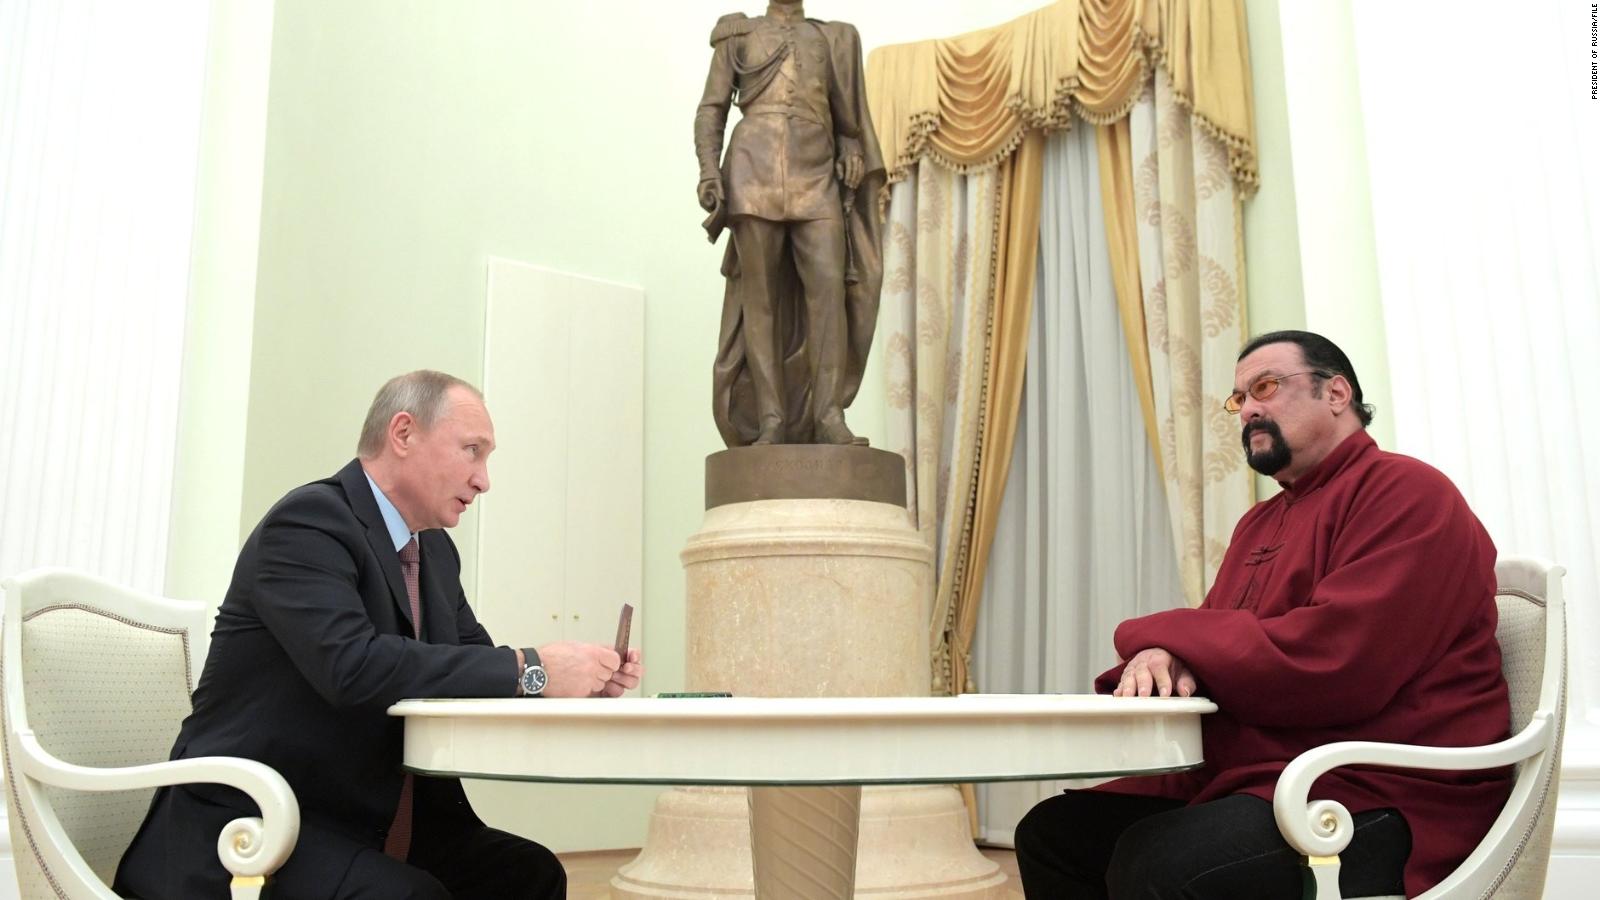 Steven Seagal given honor by Vladimir Putin for 'humanitarian' work - CNN